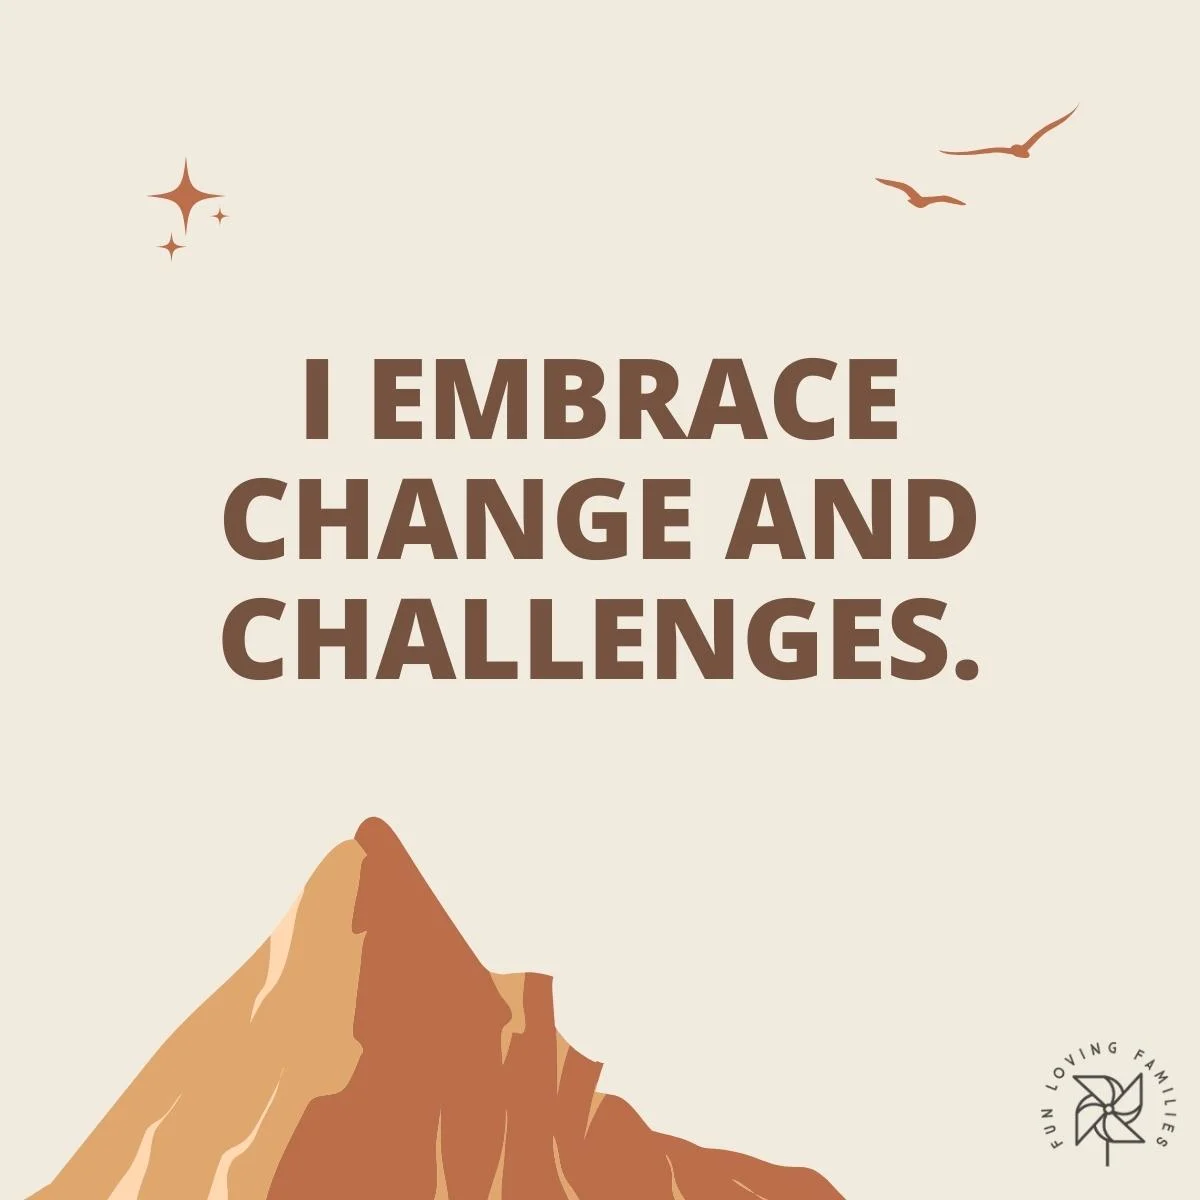 I embrace change and challenges affirmation